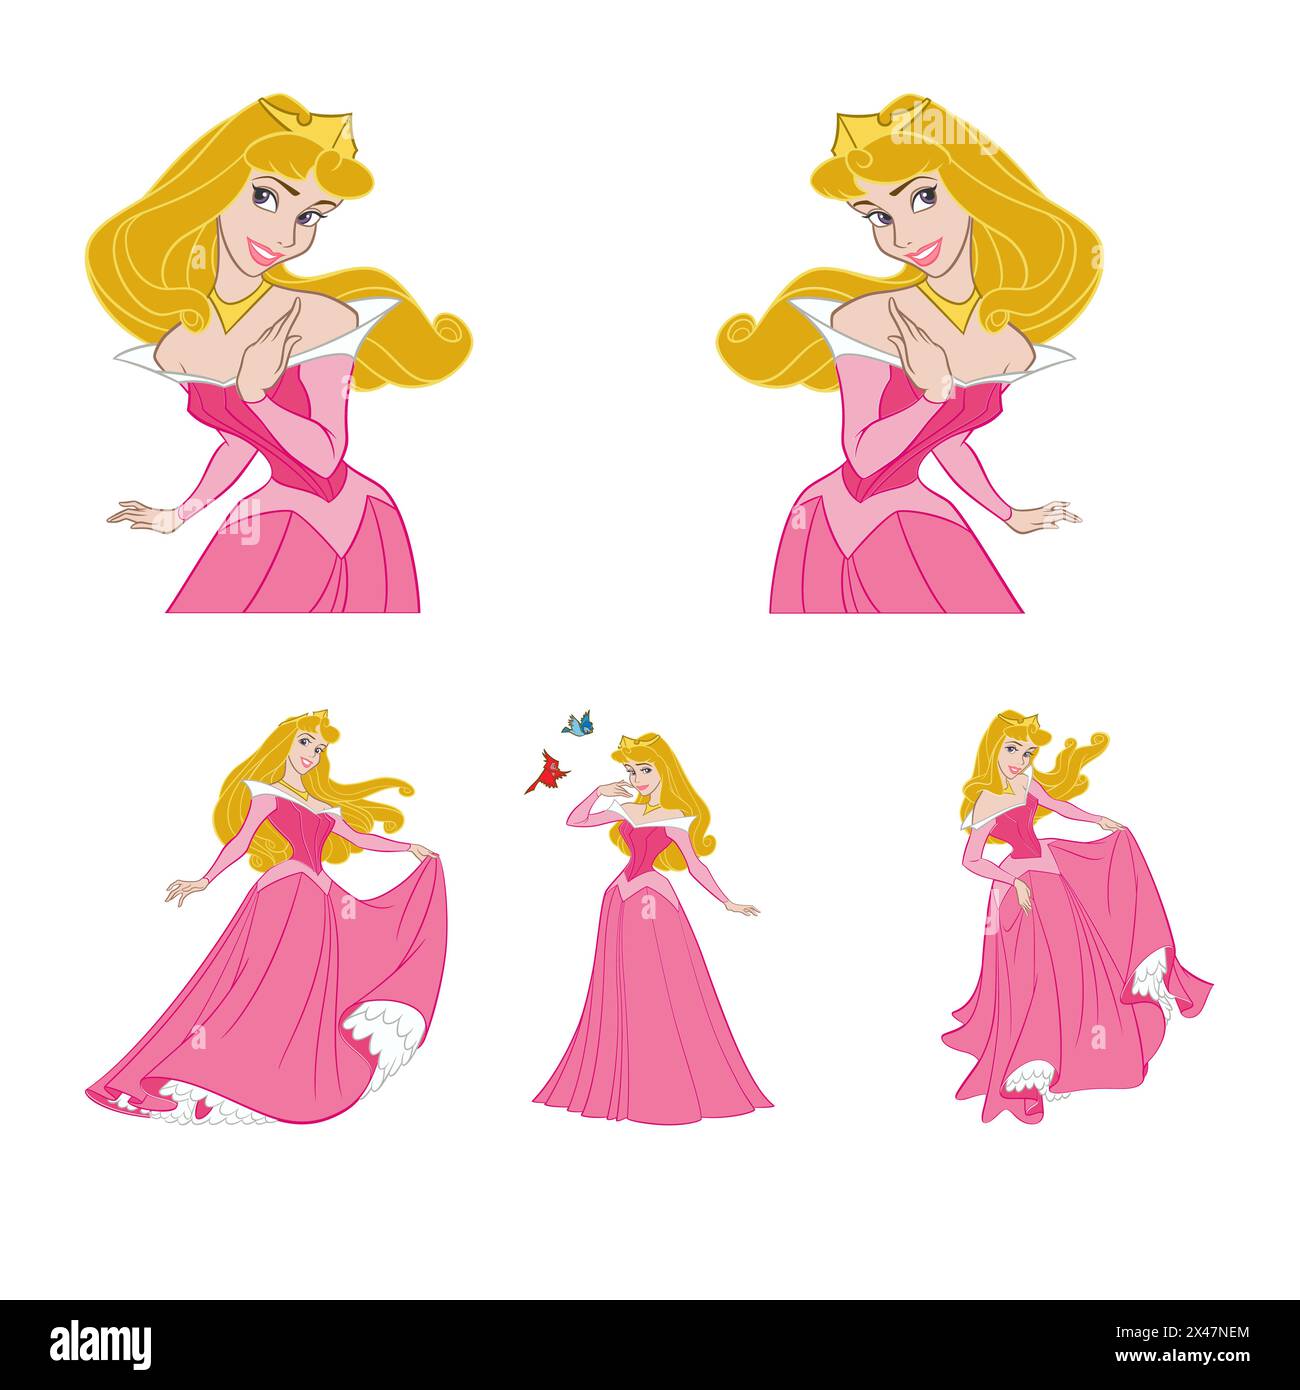 Disney princess aurora fairy tale fantasy vector illustration Stock Vector